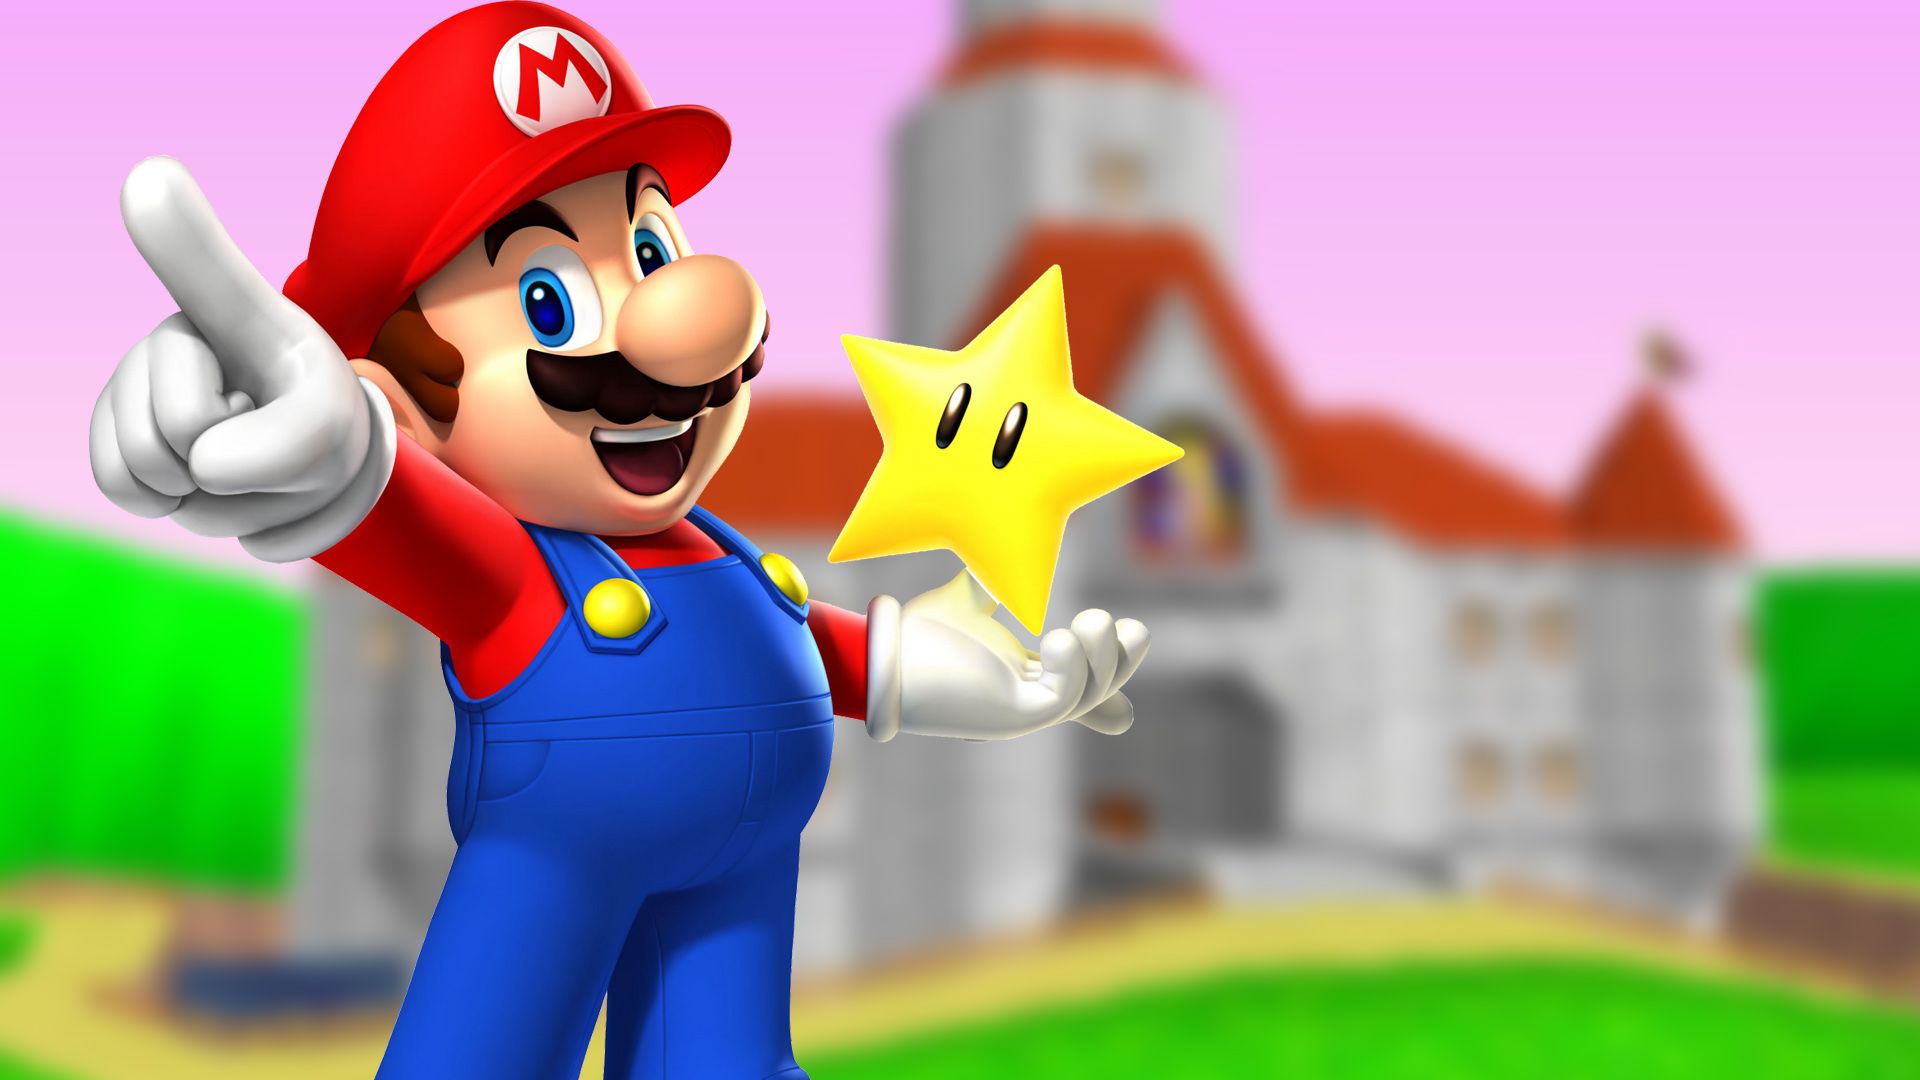 New Super Mario Movie  - High-Priority Movie for Illumination